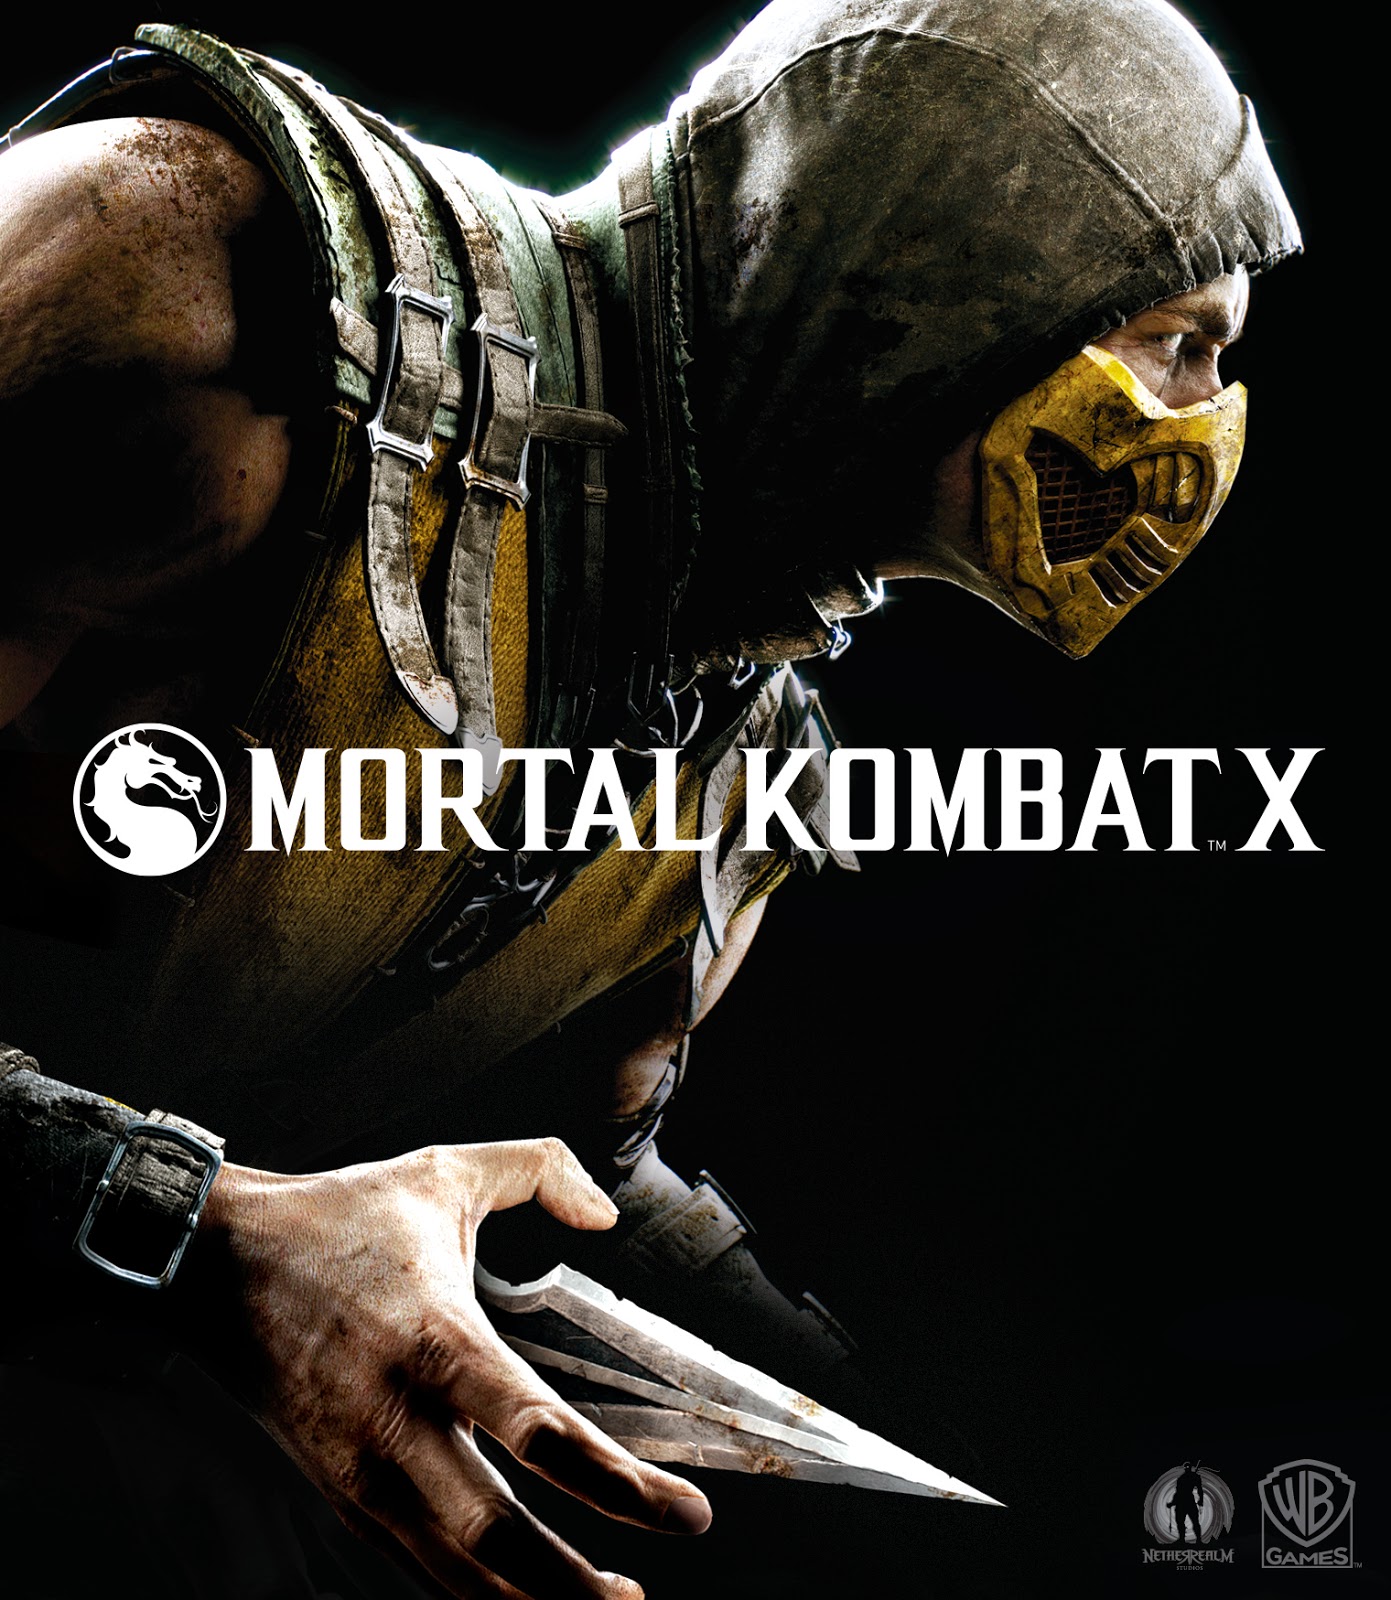 Videojuegos: Warner Bros anuncia Mortal Kombat X.